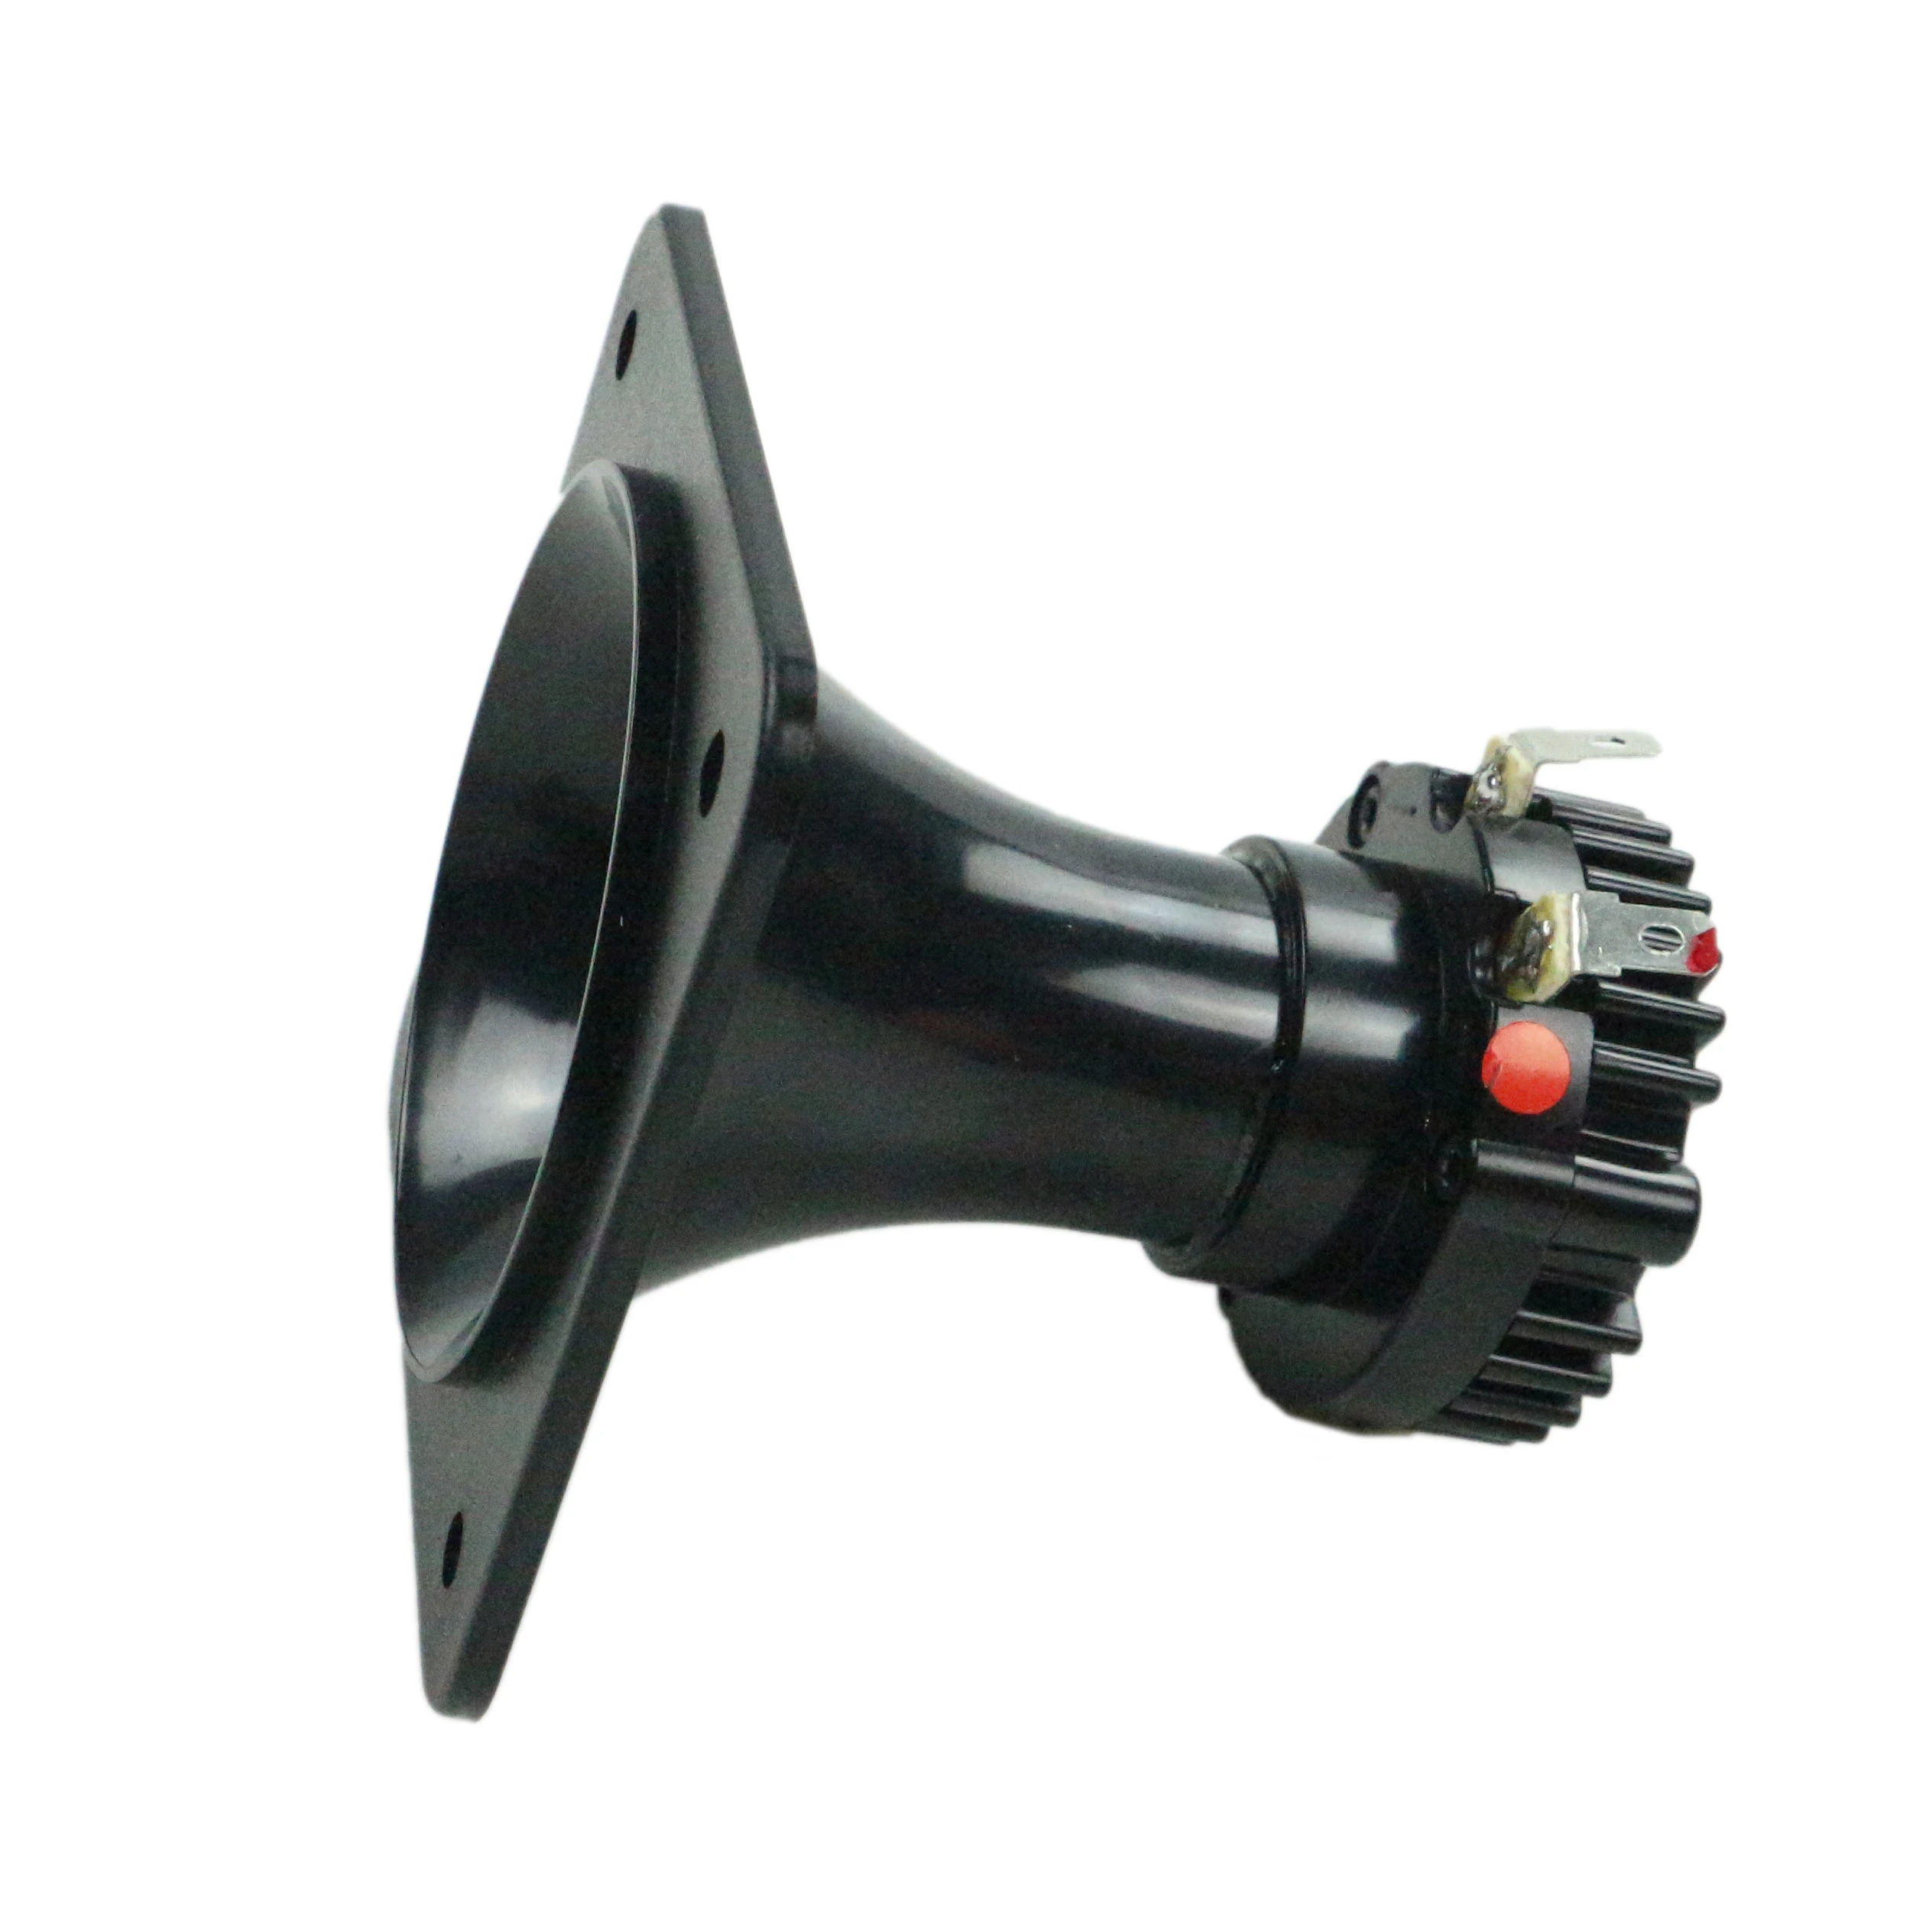 ABS Car Speaker AUDAX AX-1000 Horn Piezo TweeterHigh Quality Horn Tweeter